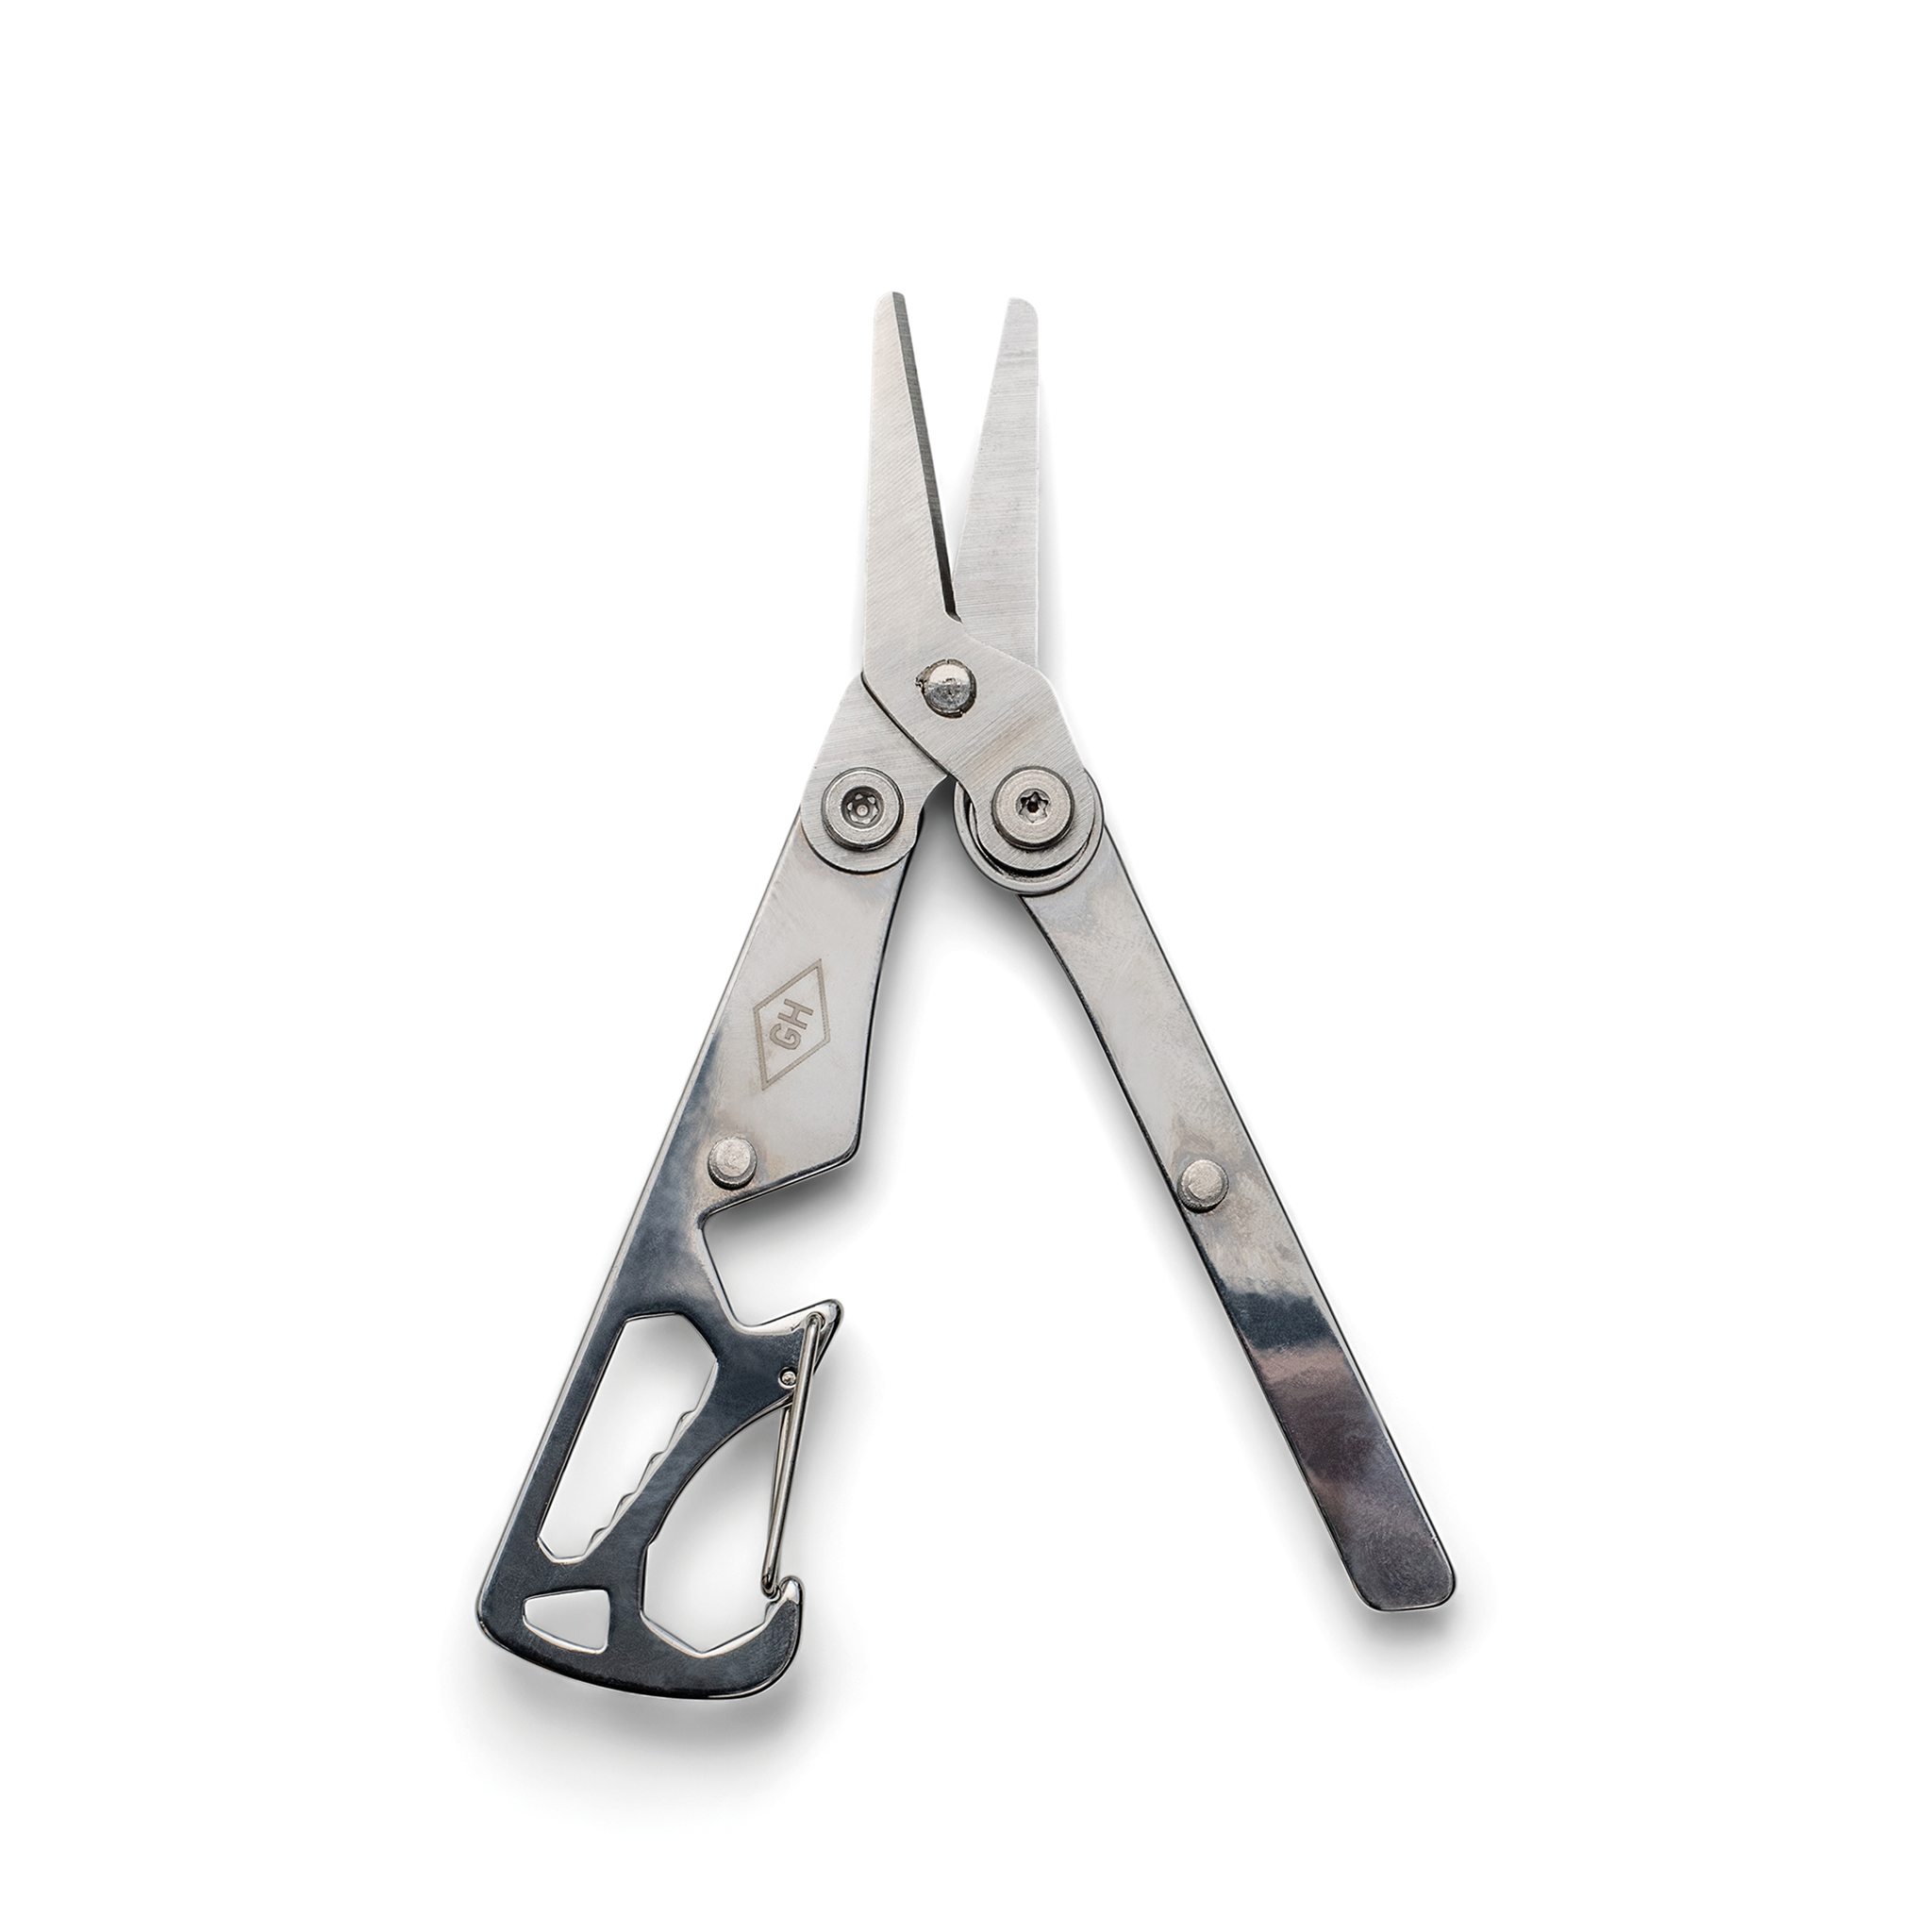 Gentleman’s Hardware 11-in-1 Foldable Scissors Multi-Tool